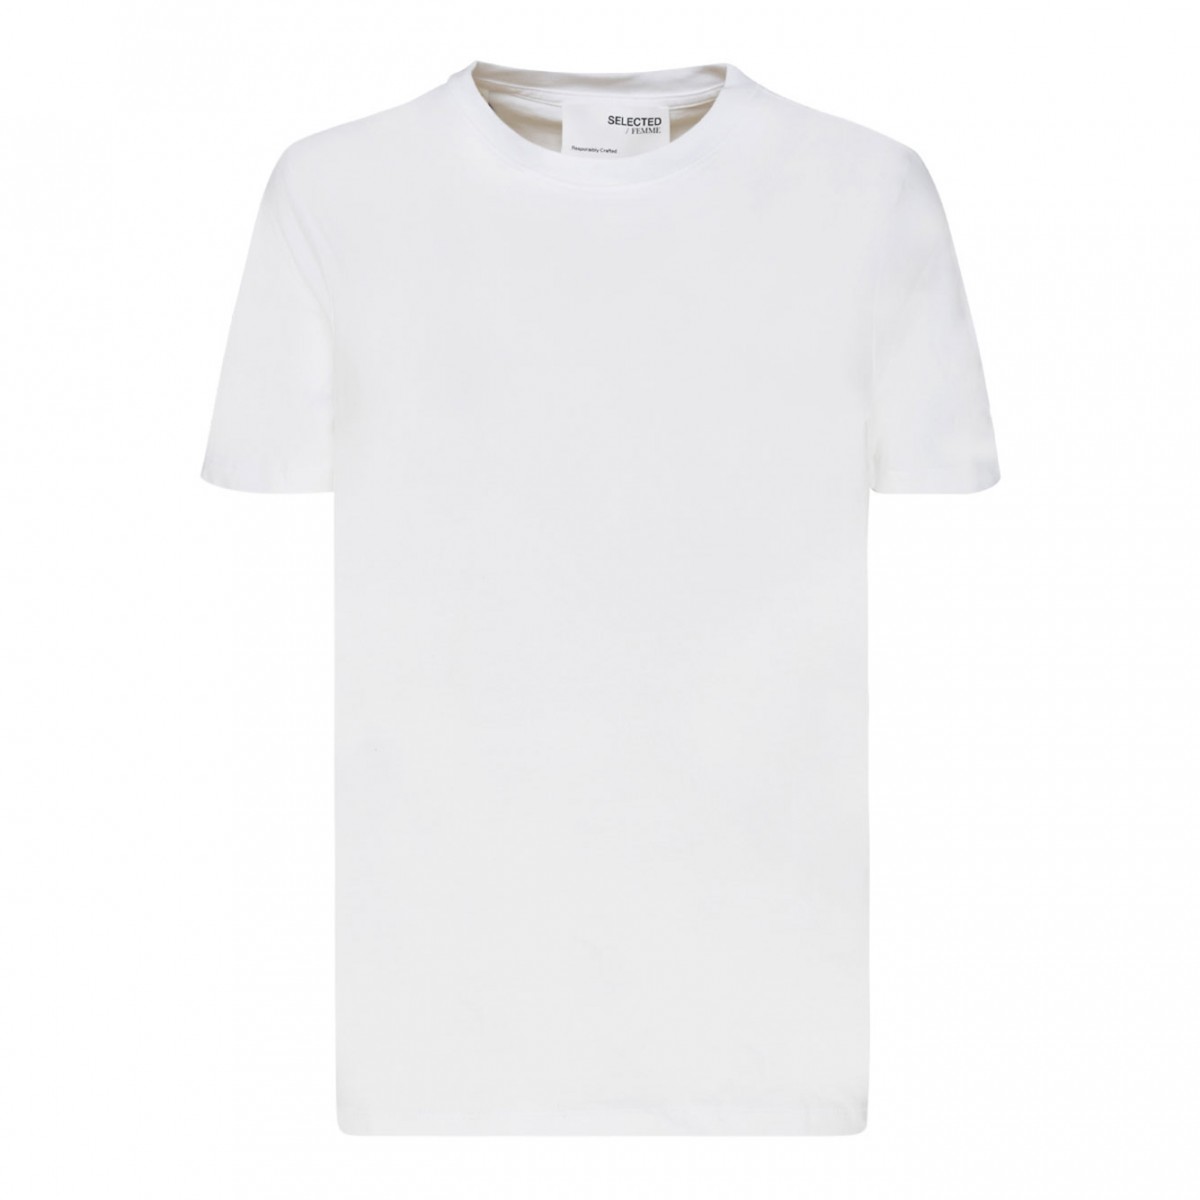 White Organic Cotton T-Shirt